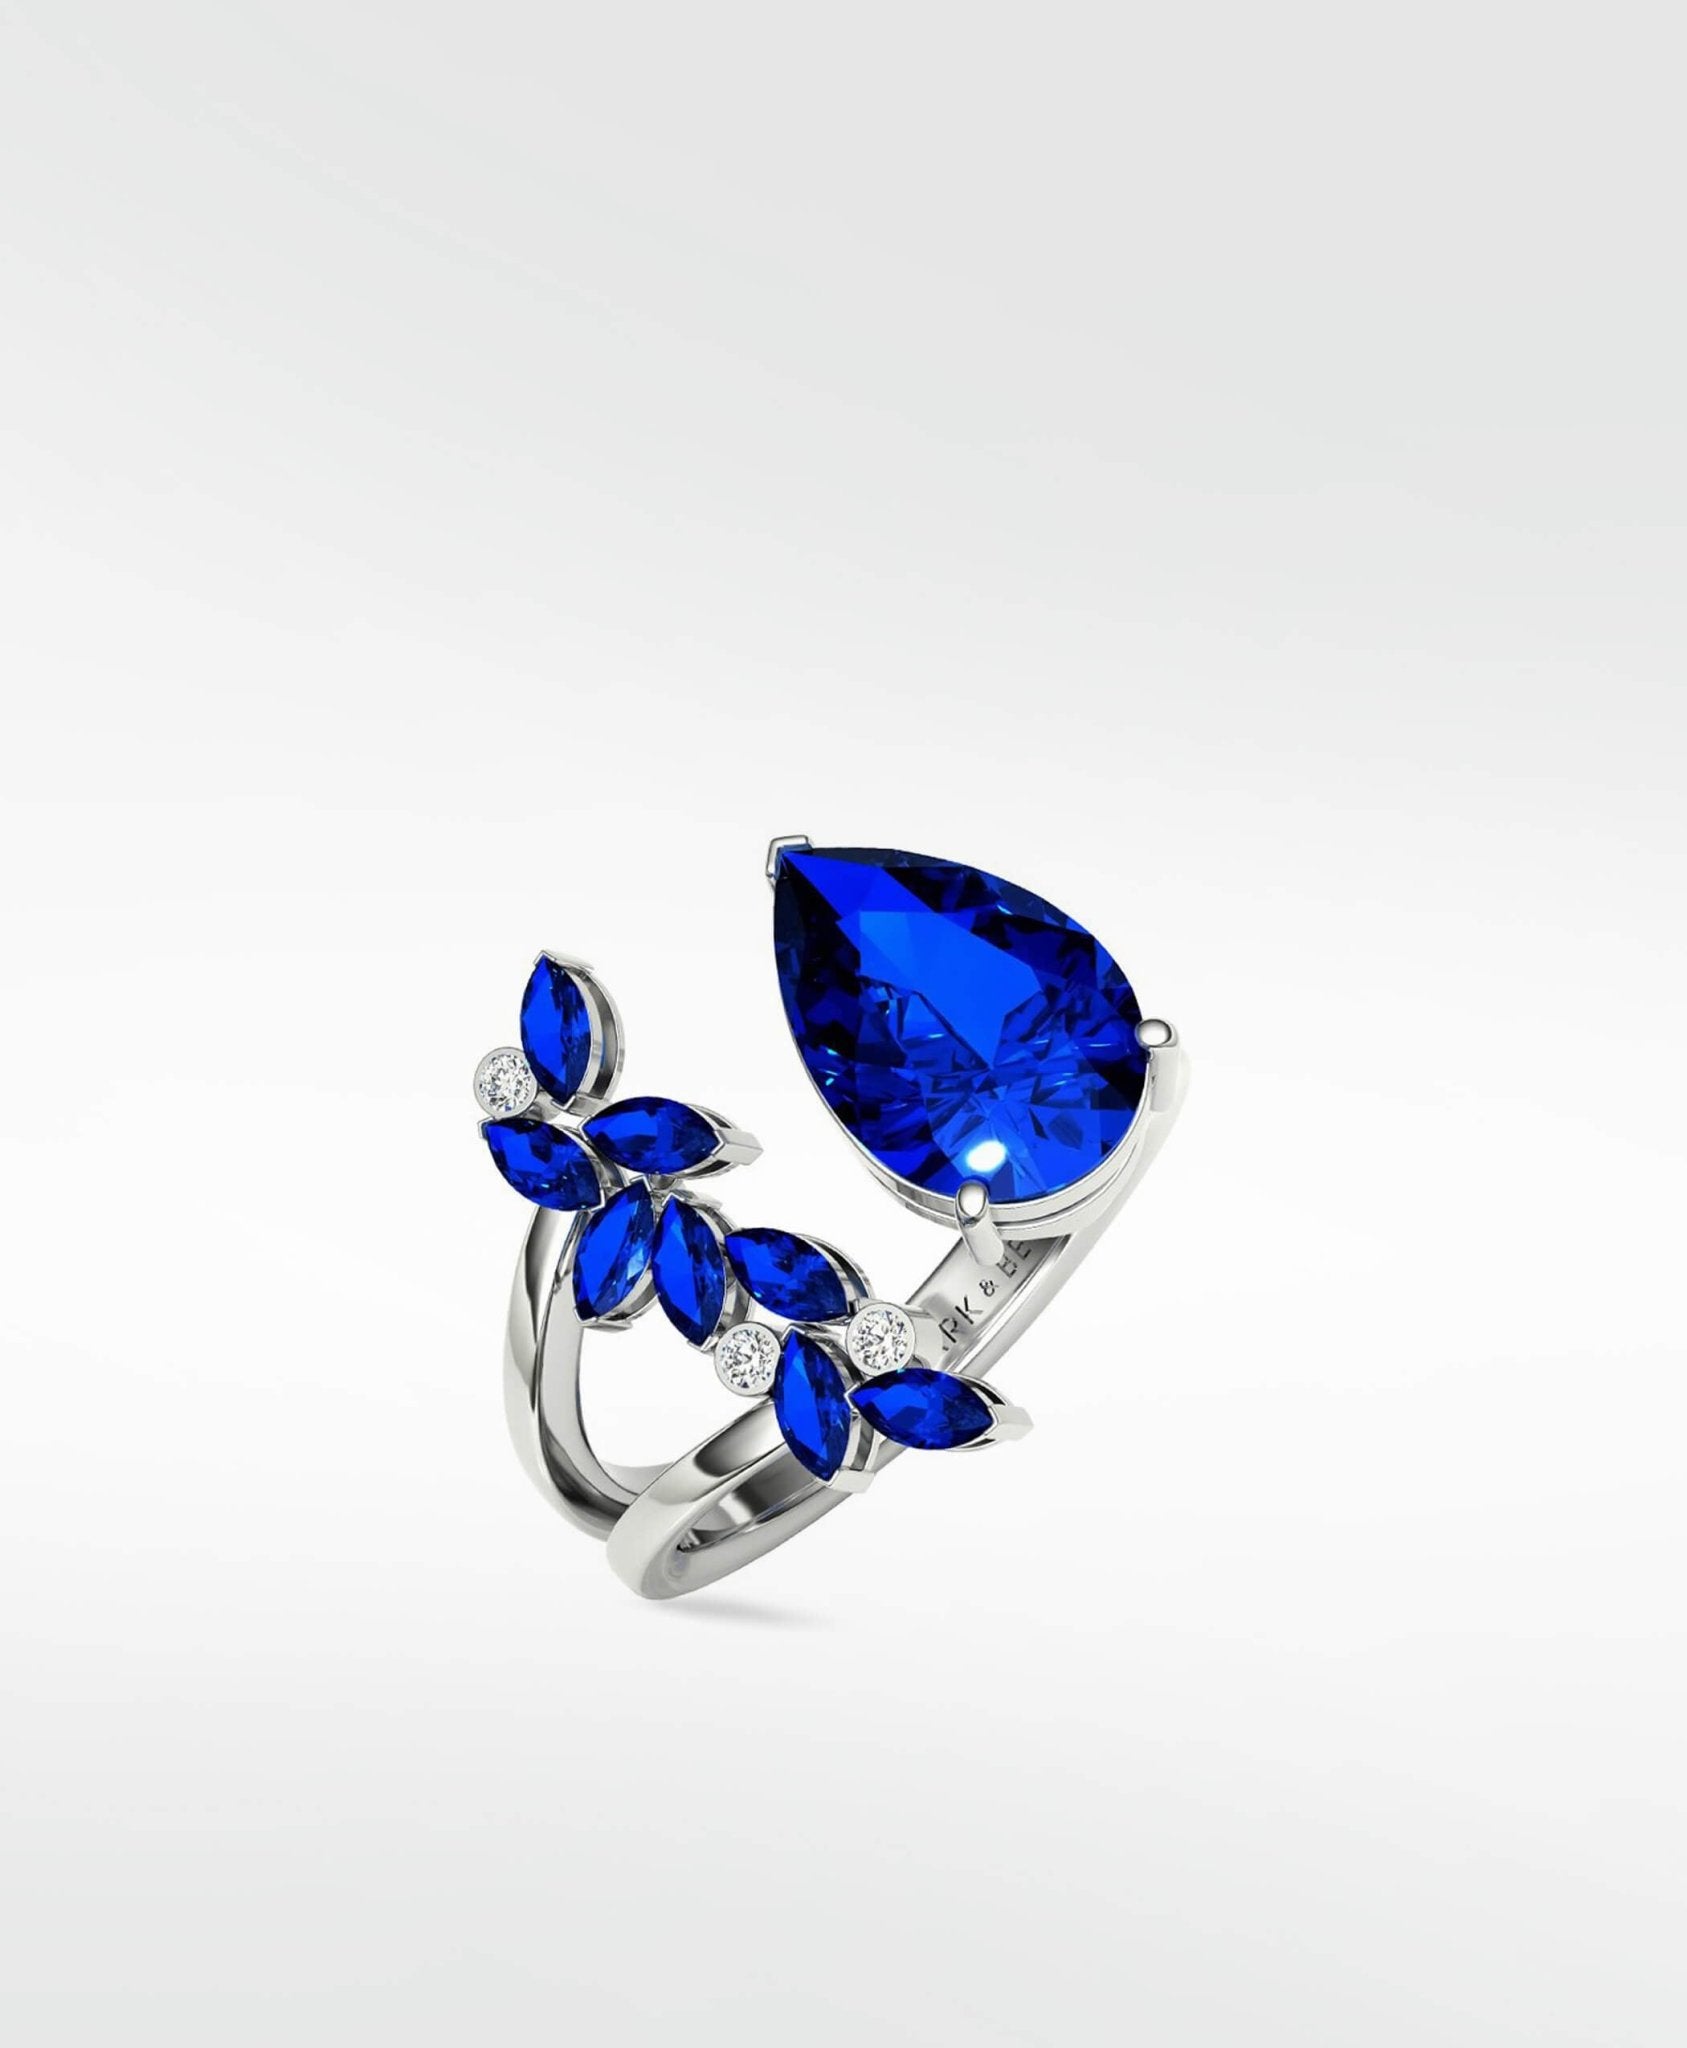 Veto Blue Sapphire Open Petal Cocktail Ring in 18K White Gold - Lark and Berry